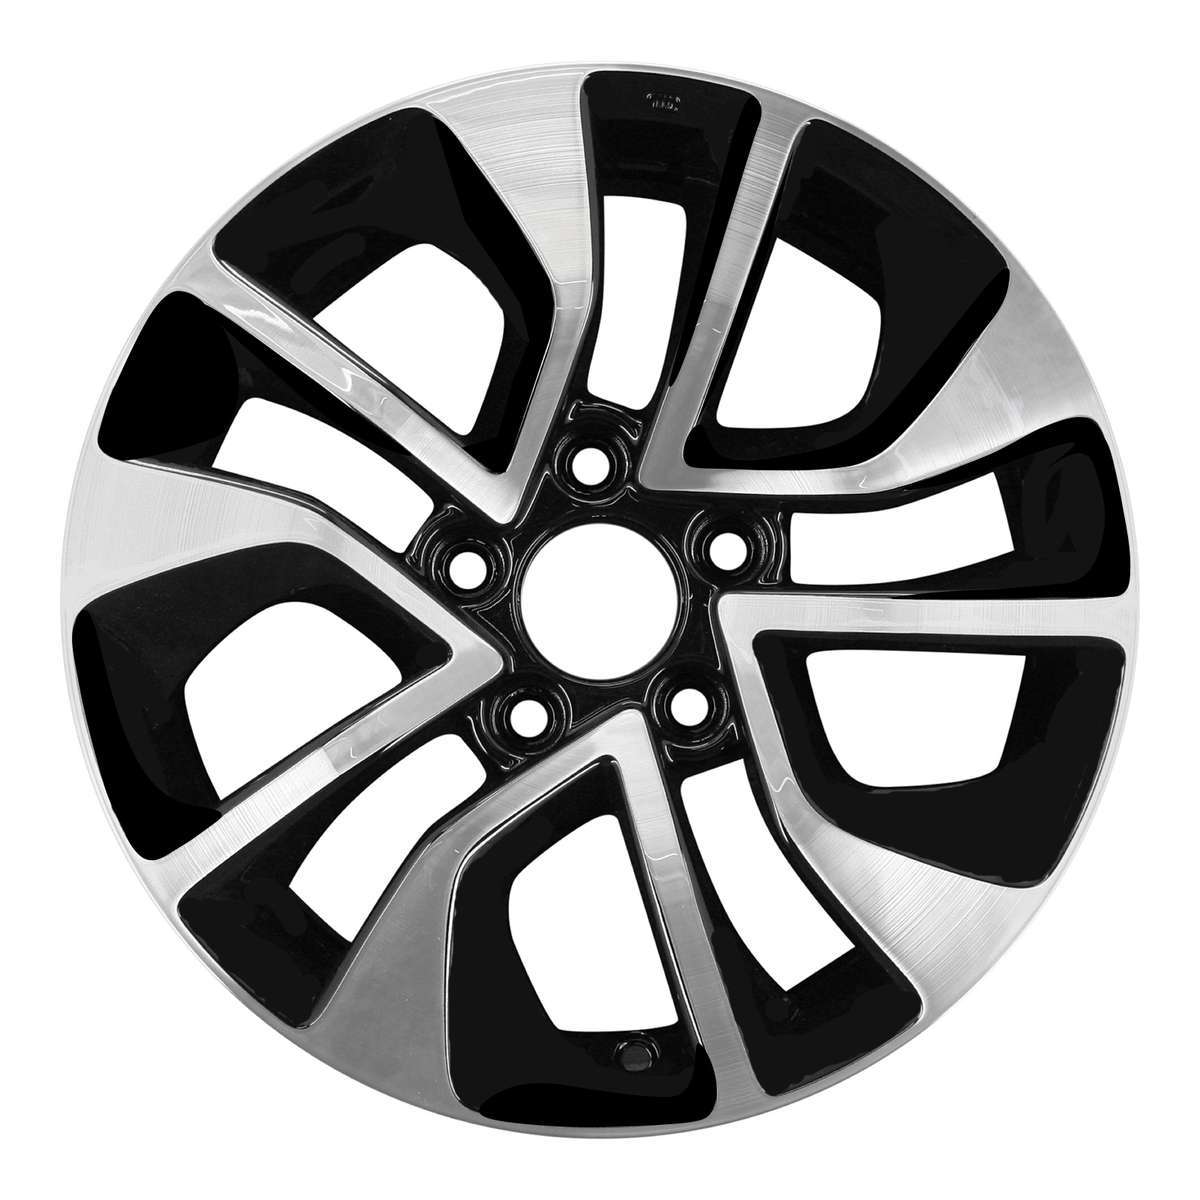 2014 Honda Civic New 16" Replacement Wheel Rim RW64054MB